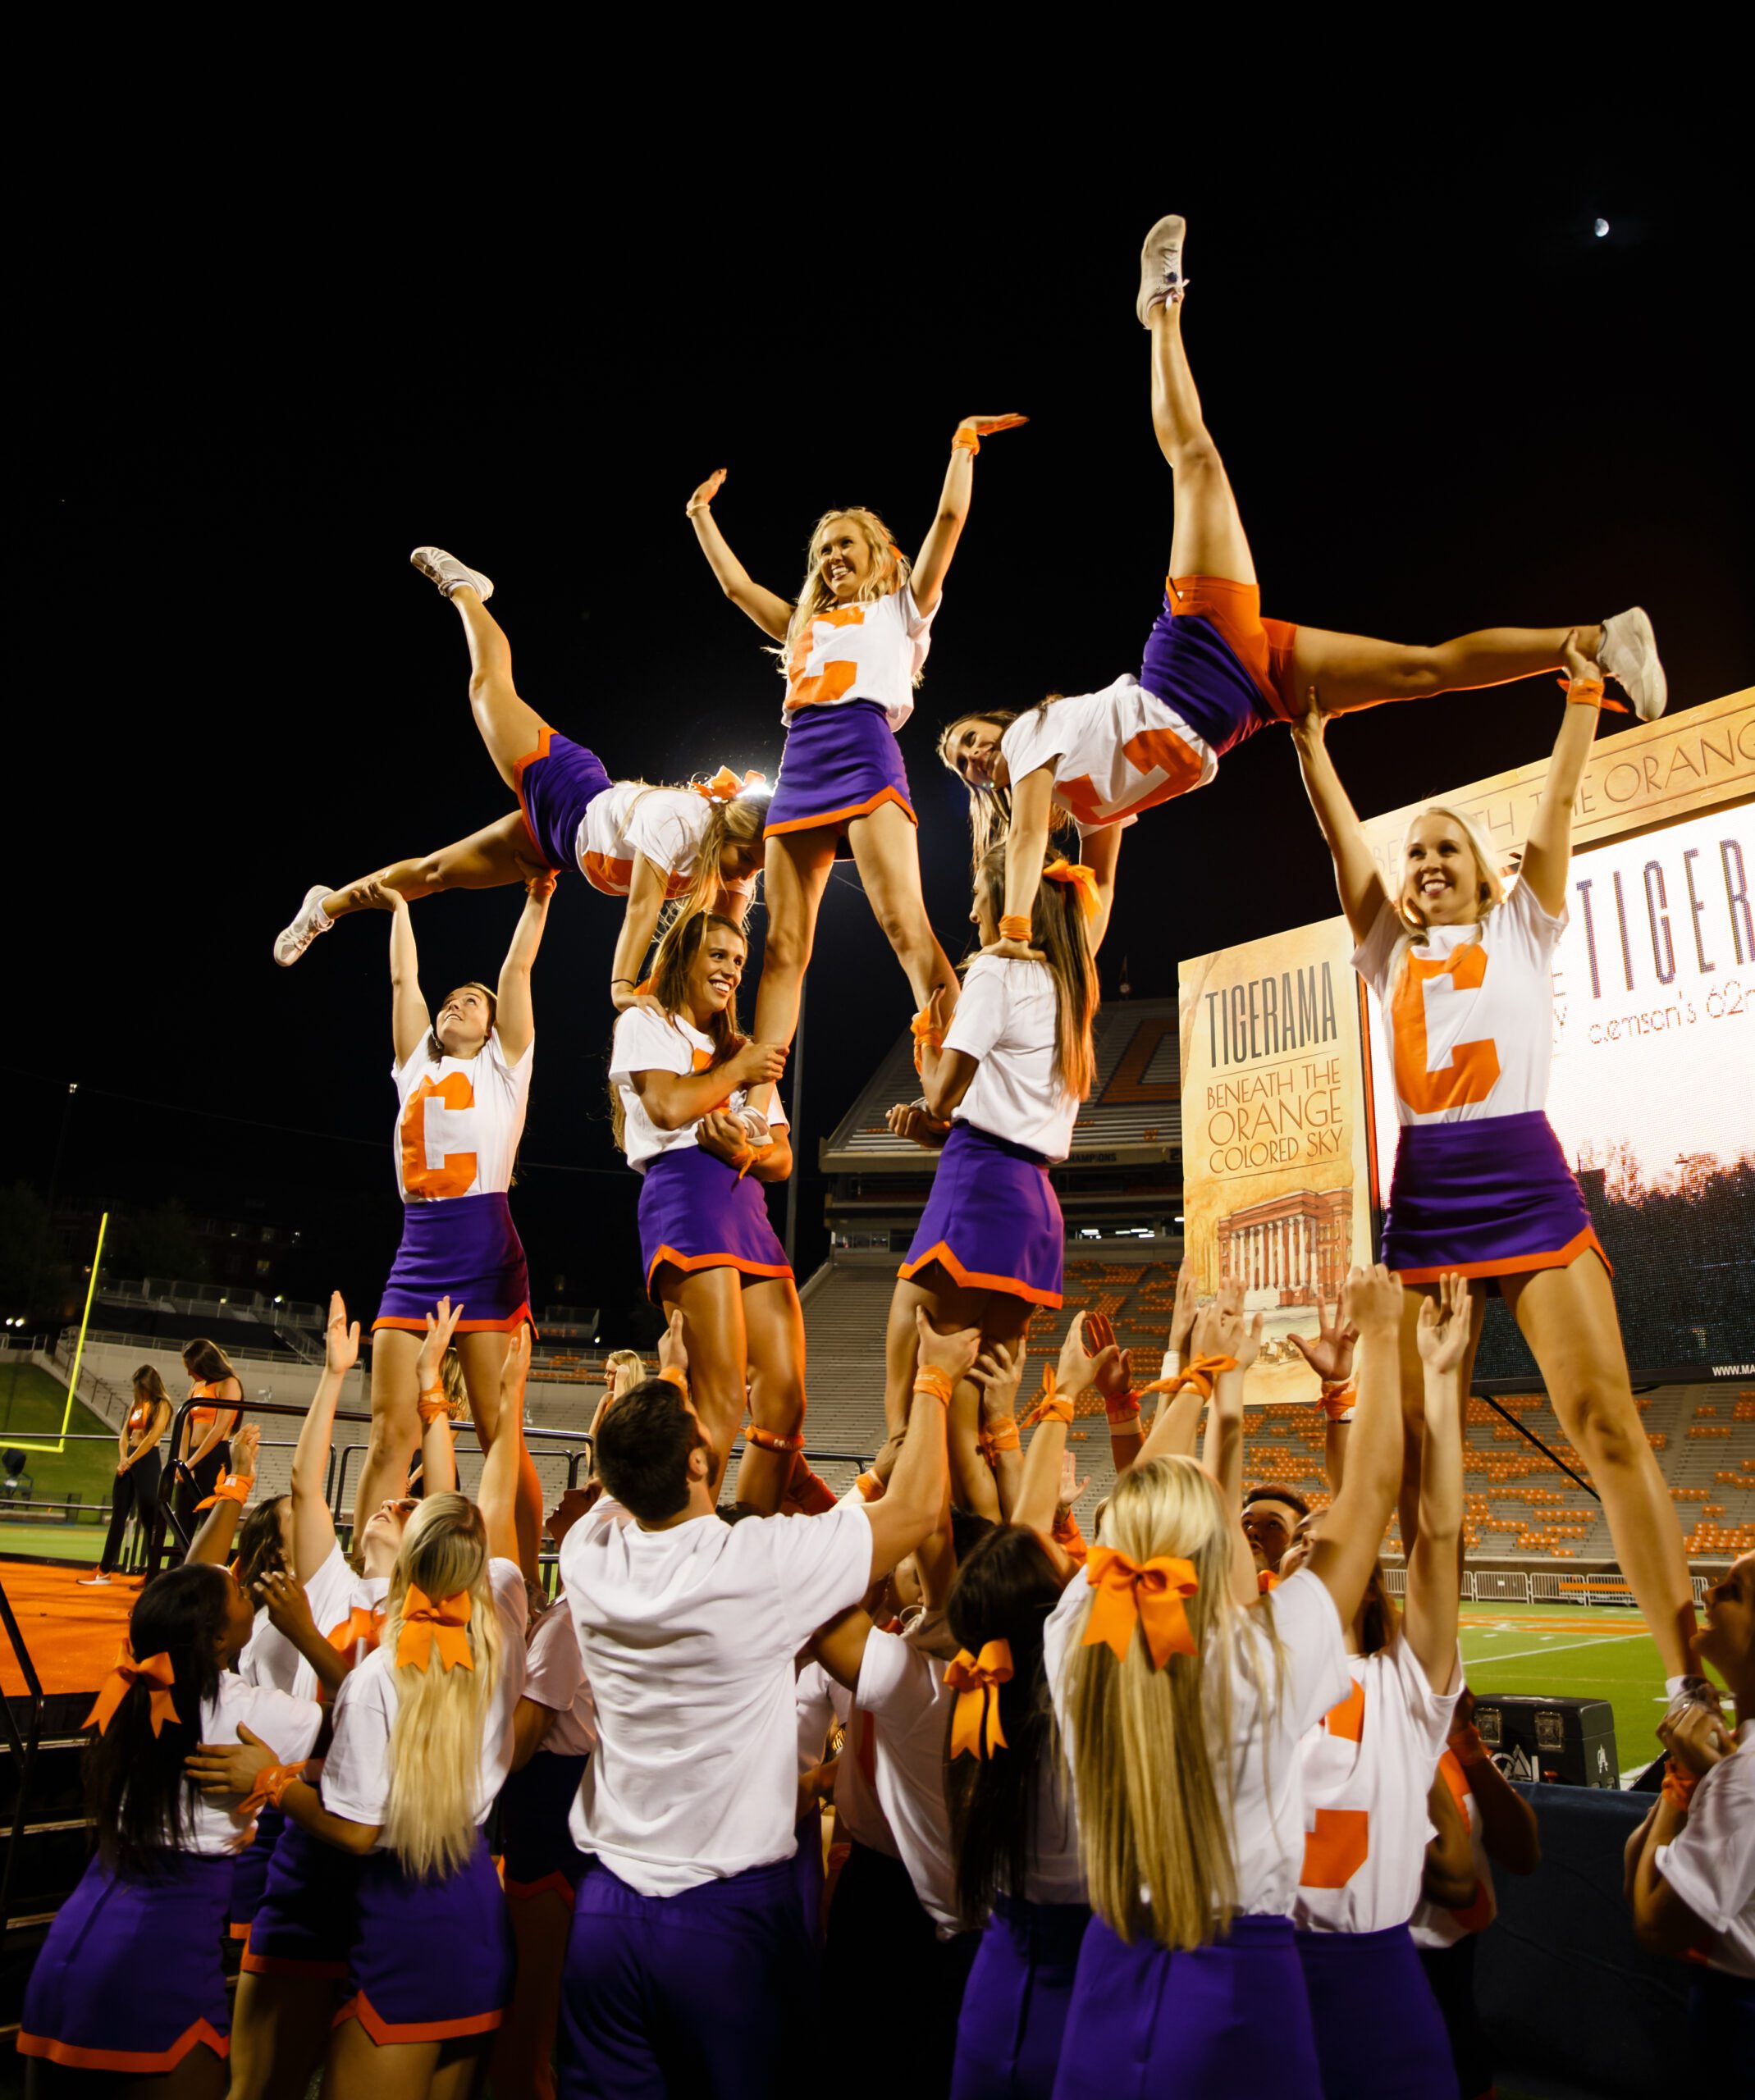 Cheerleaders perform during Tigerama